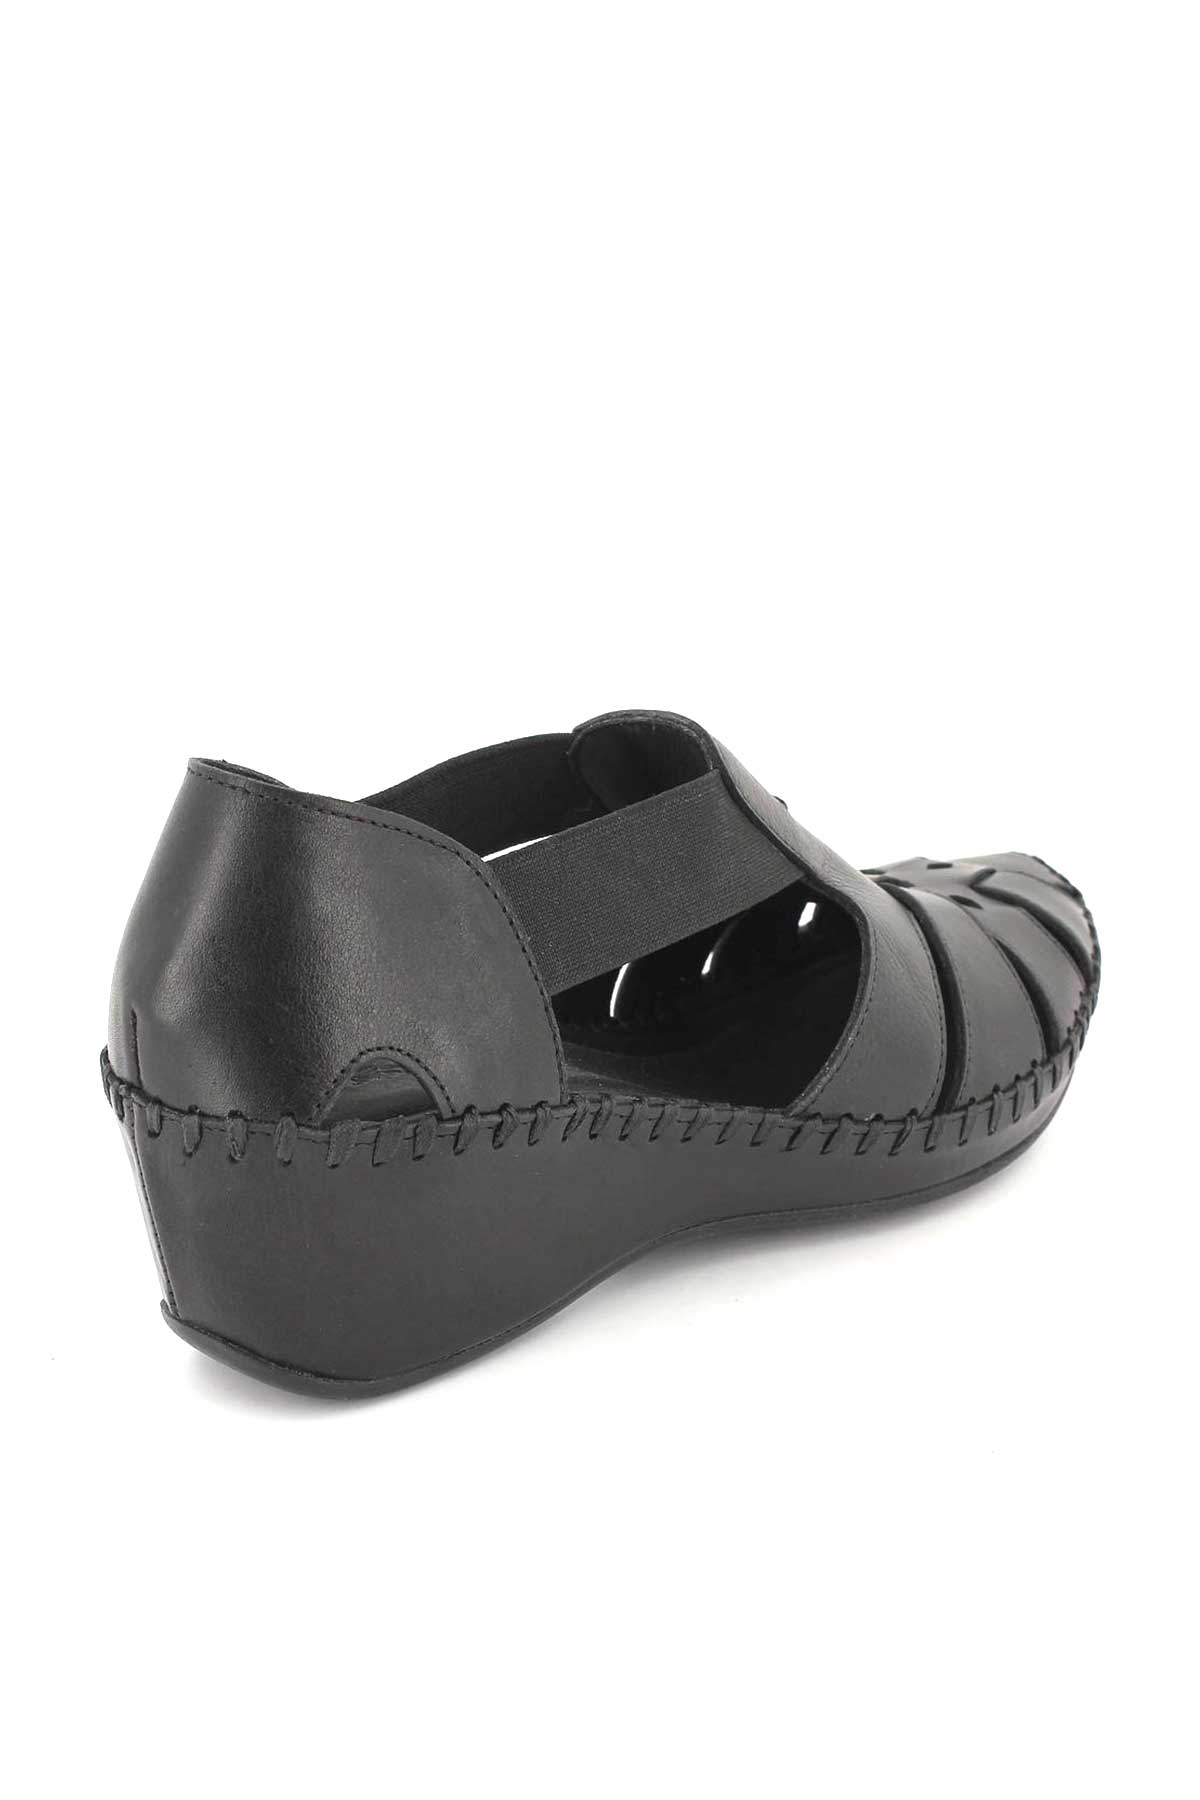 Kadın Comfort Deri Sandalet Siyah 18793056 - Thumbnail